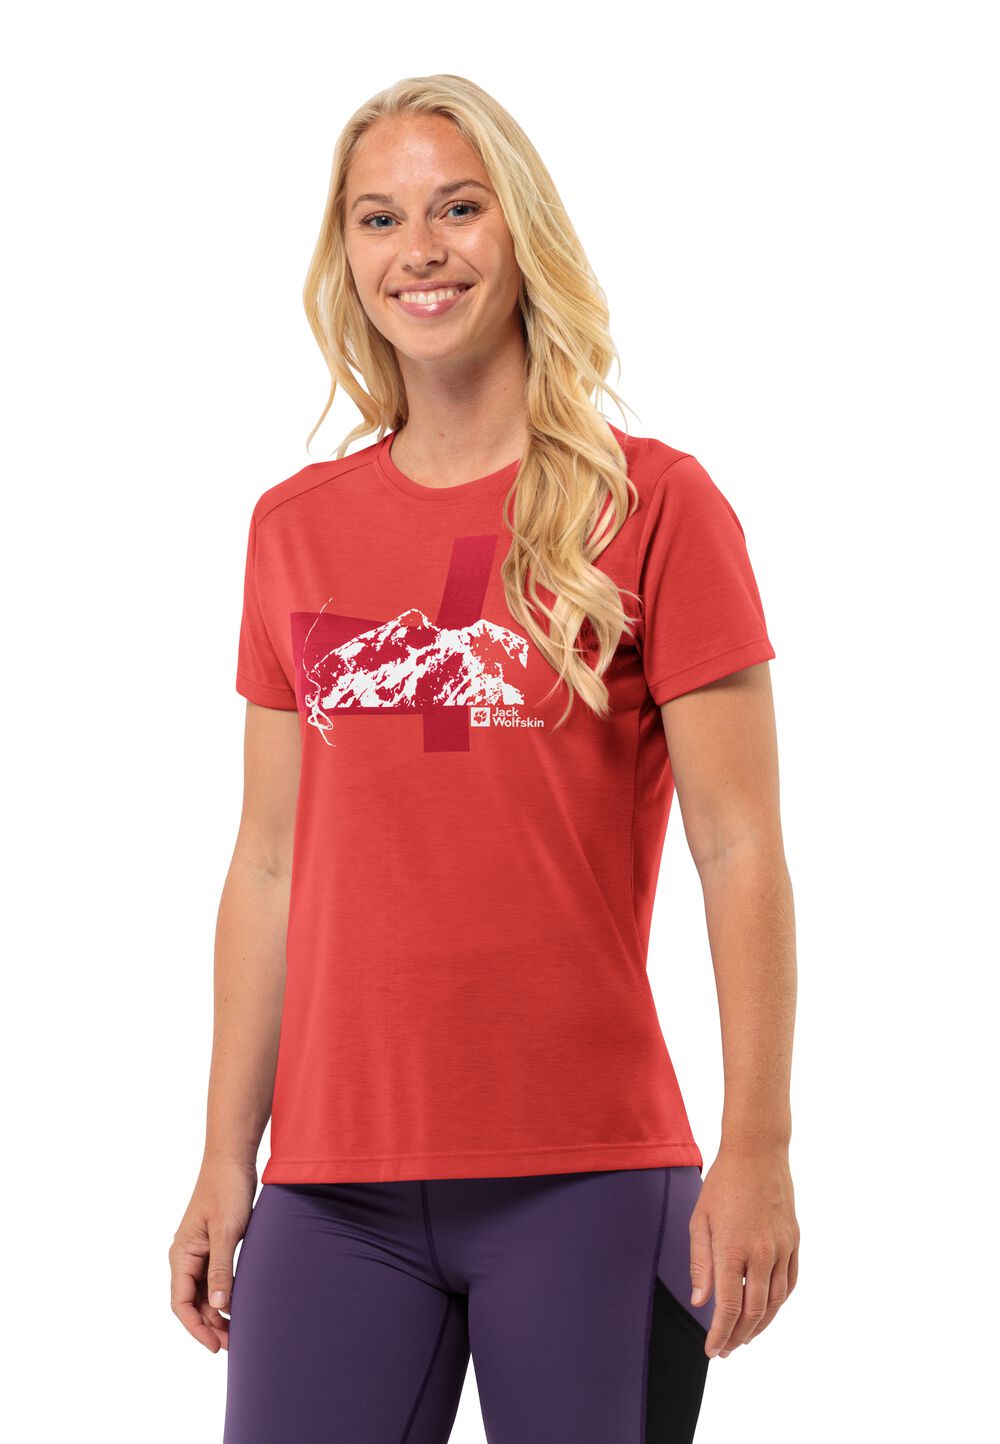 Jack Wolfskin Vonnan S S Graphic T-Shirt Women Functioneel shirt Dames L rood vibrant red